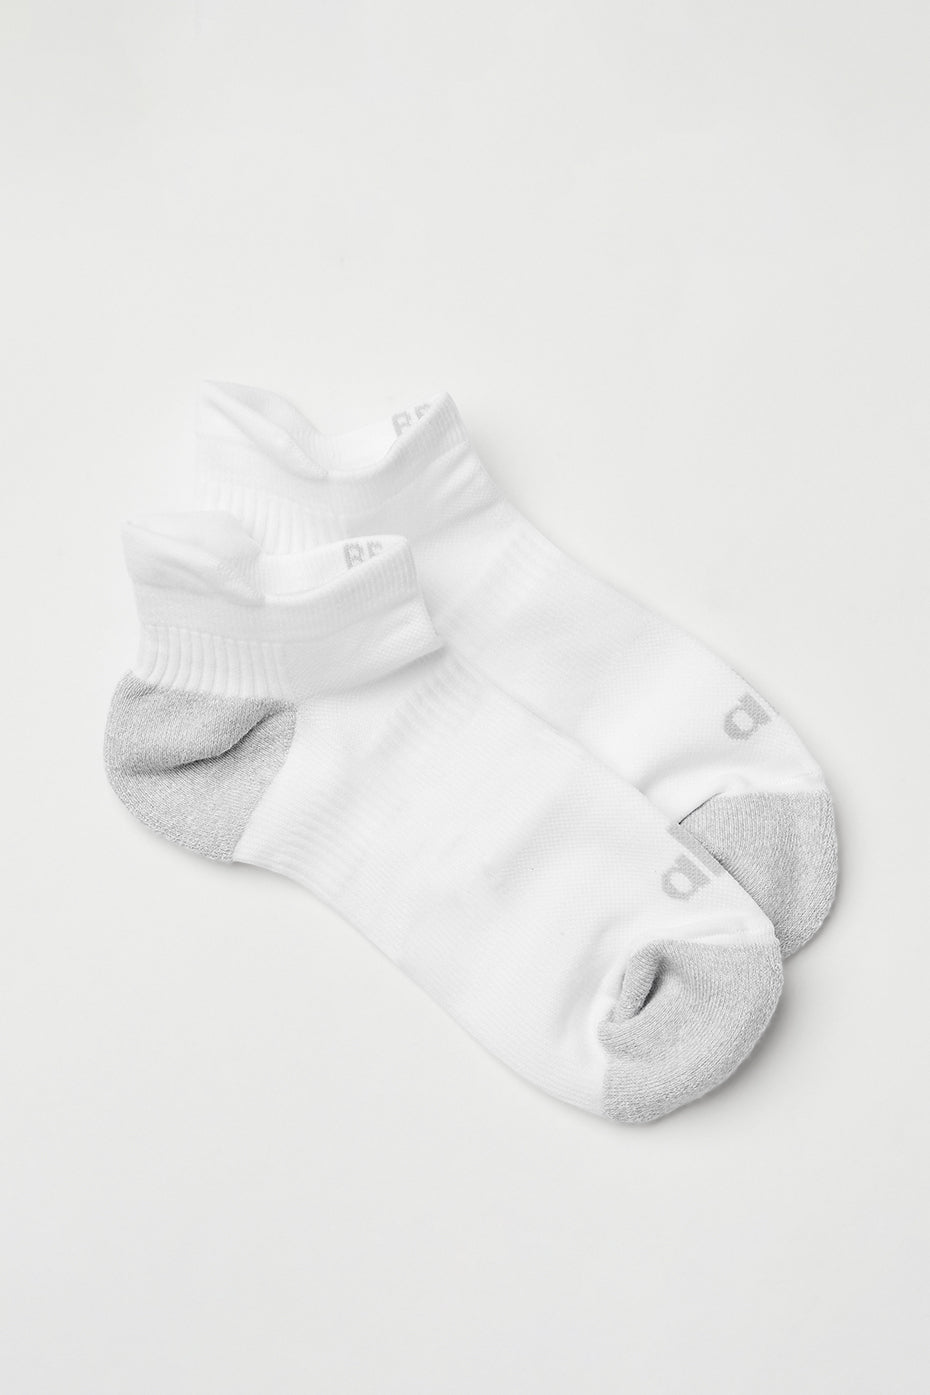 Women's Performance Tab Sock - White/Dove Grey